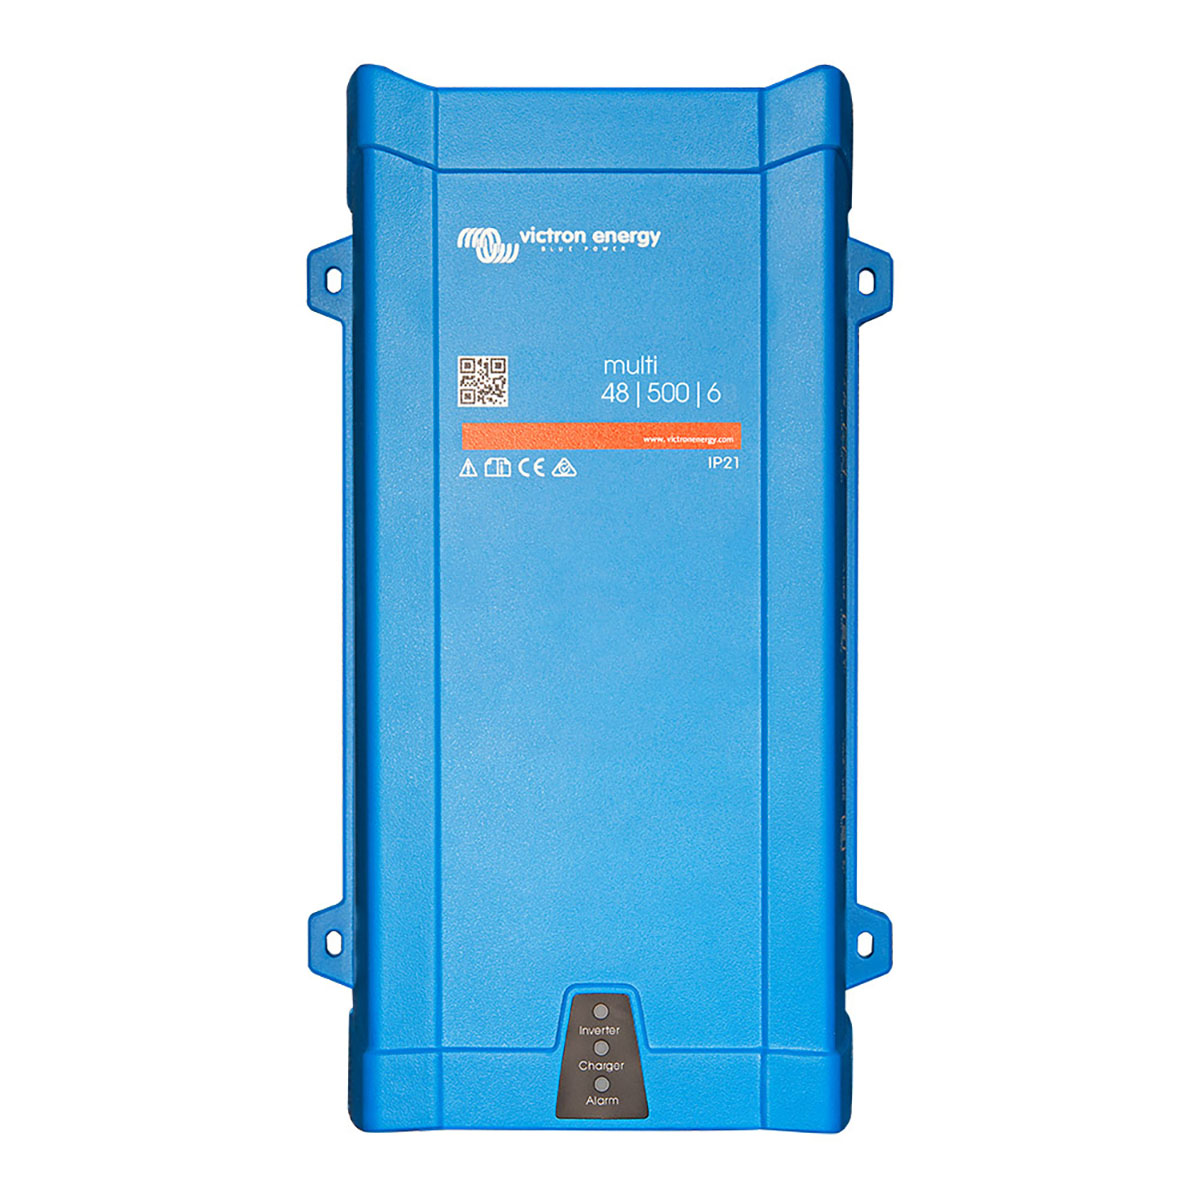 230V ENERGY Wechselrichter Energy, Victron Blau MultiPlus 48/500/6-16 VICTRON